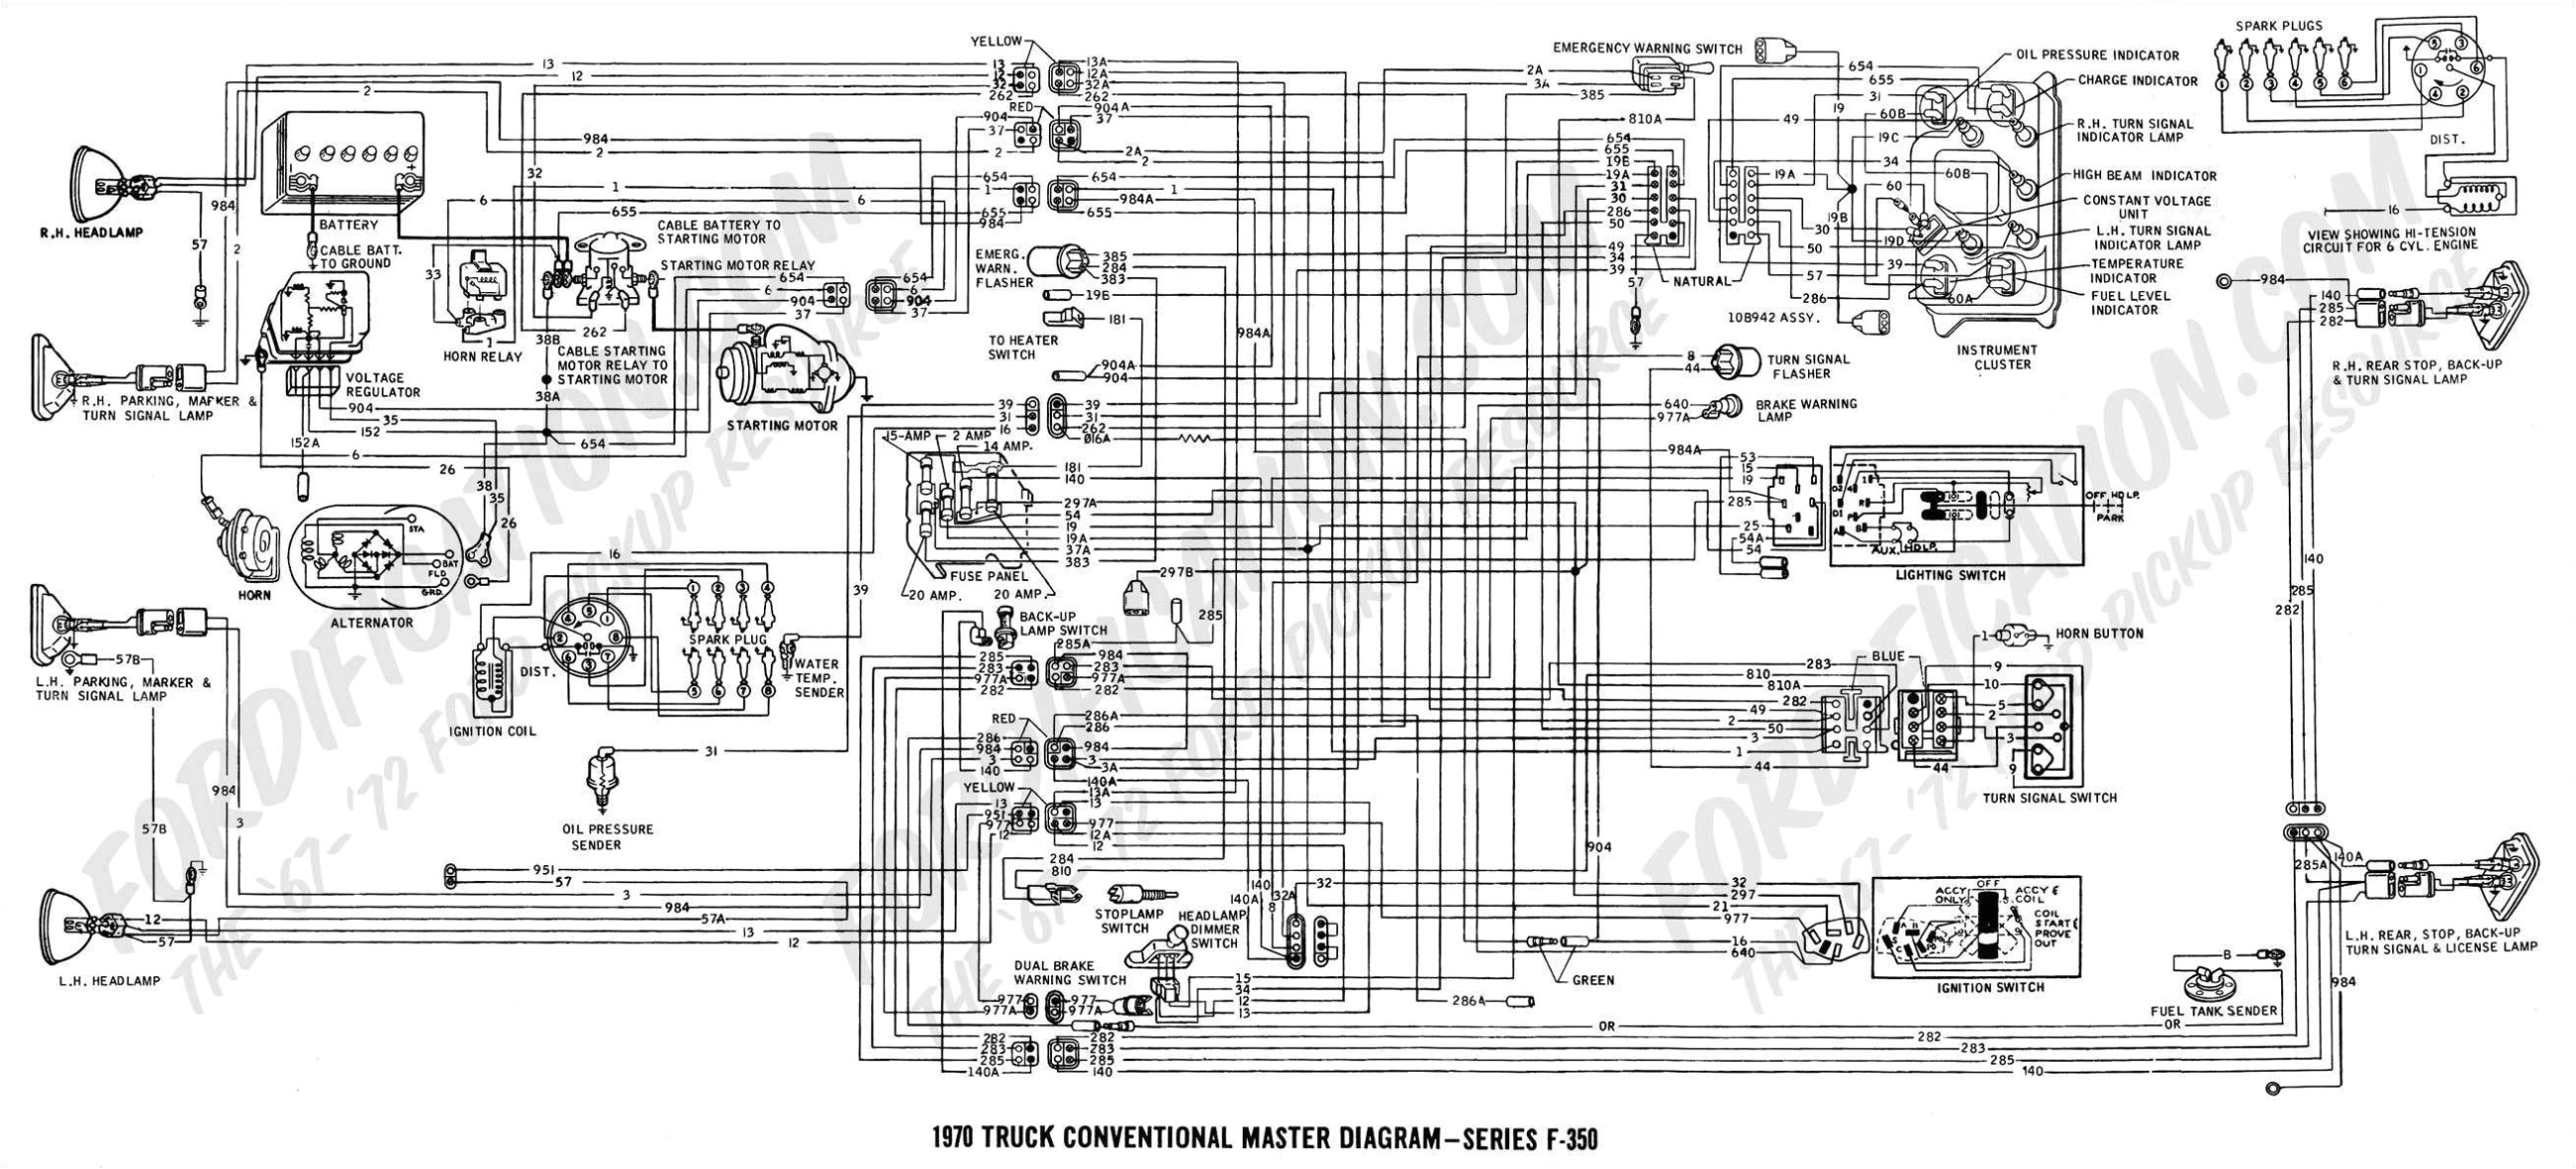 1997 ford 460 engine diagram blog wiring diagram 94 ford 460 engine diagram